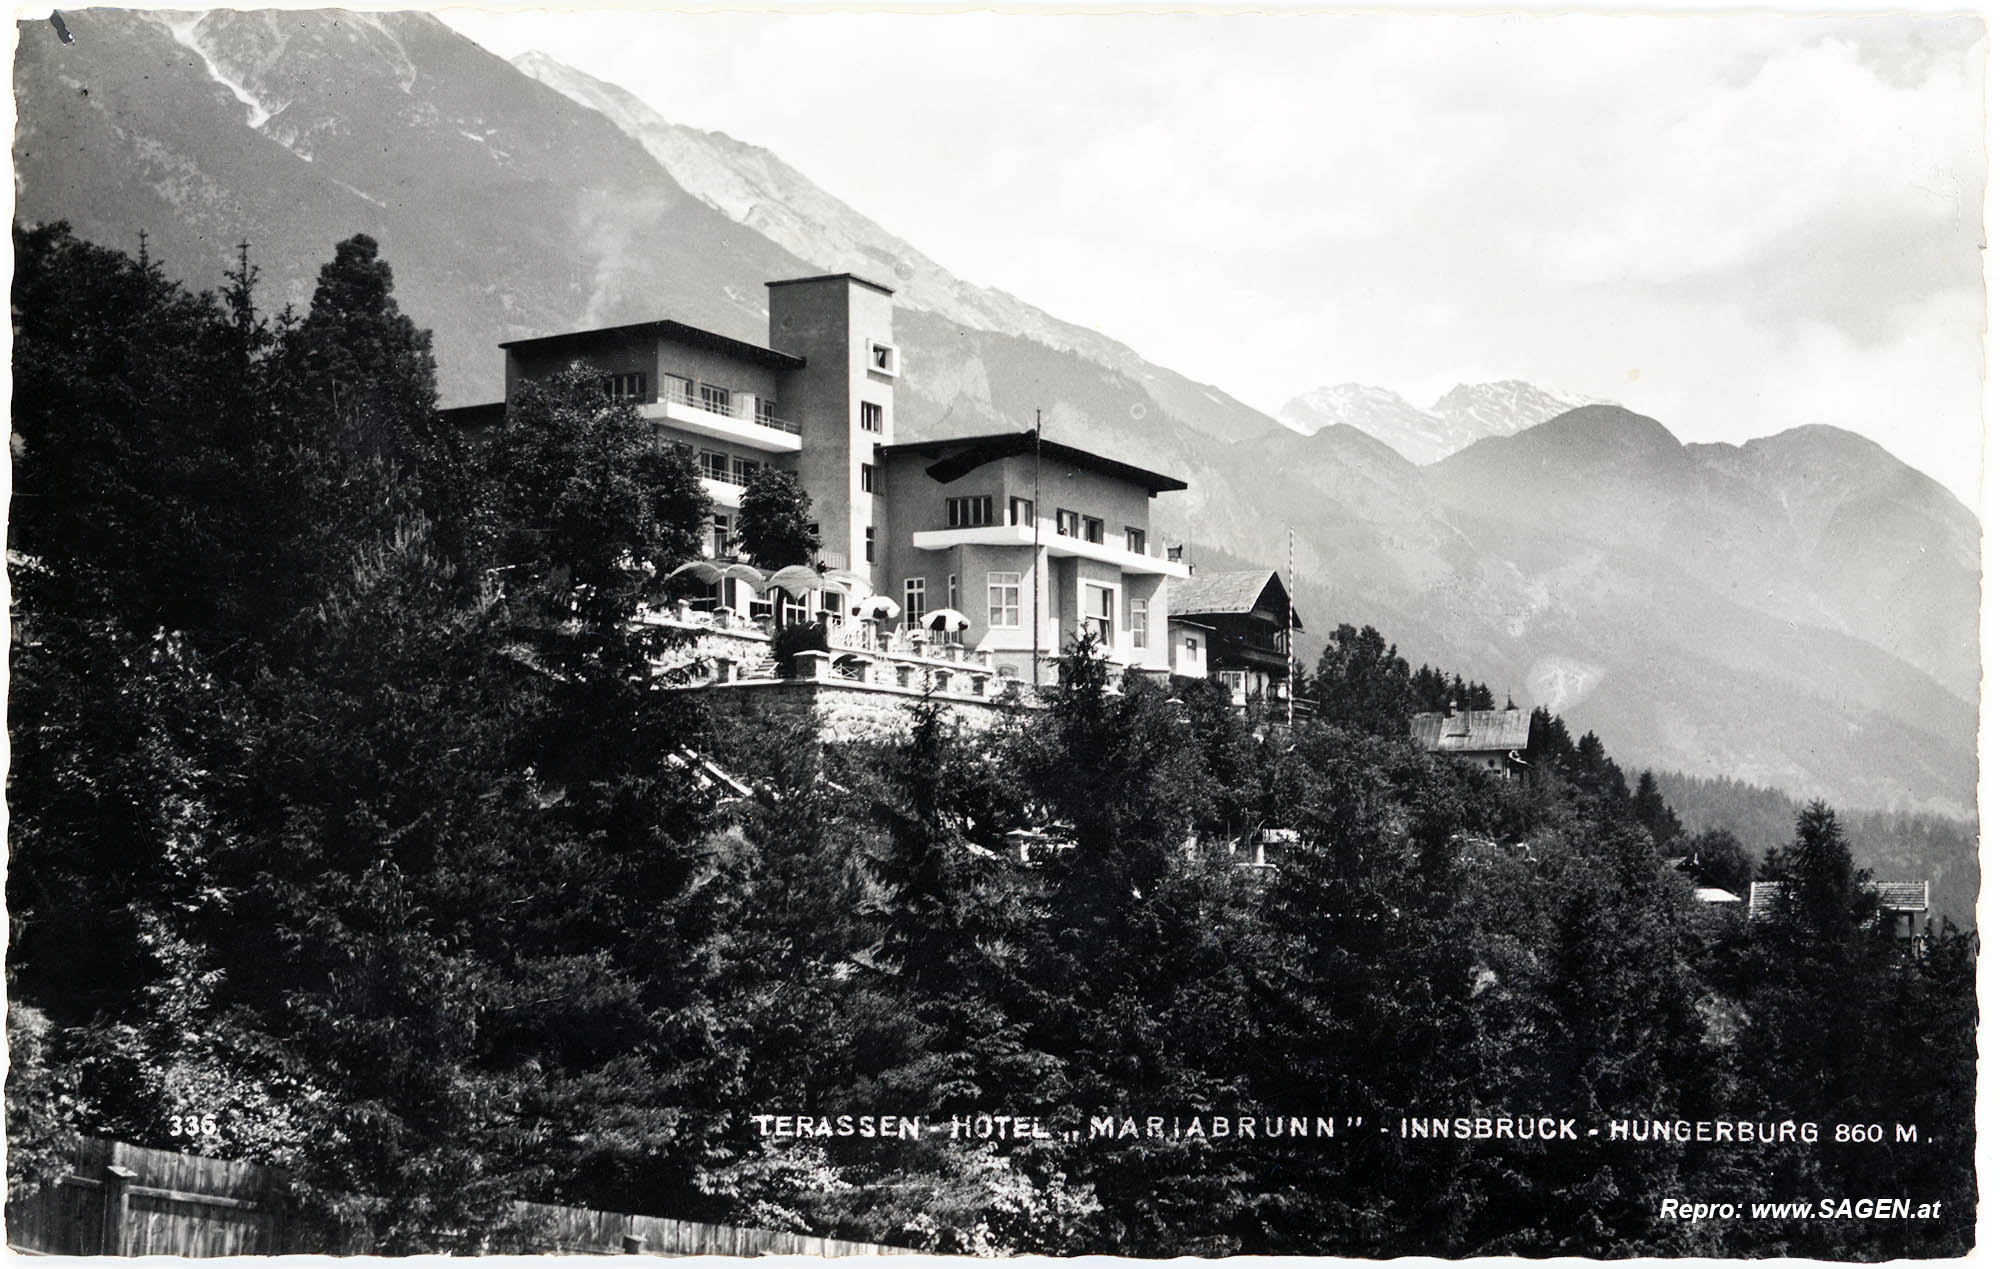 Terasssen-Hotel "Mariabrunn" - Innsbruck - Hungerburg 860 M.